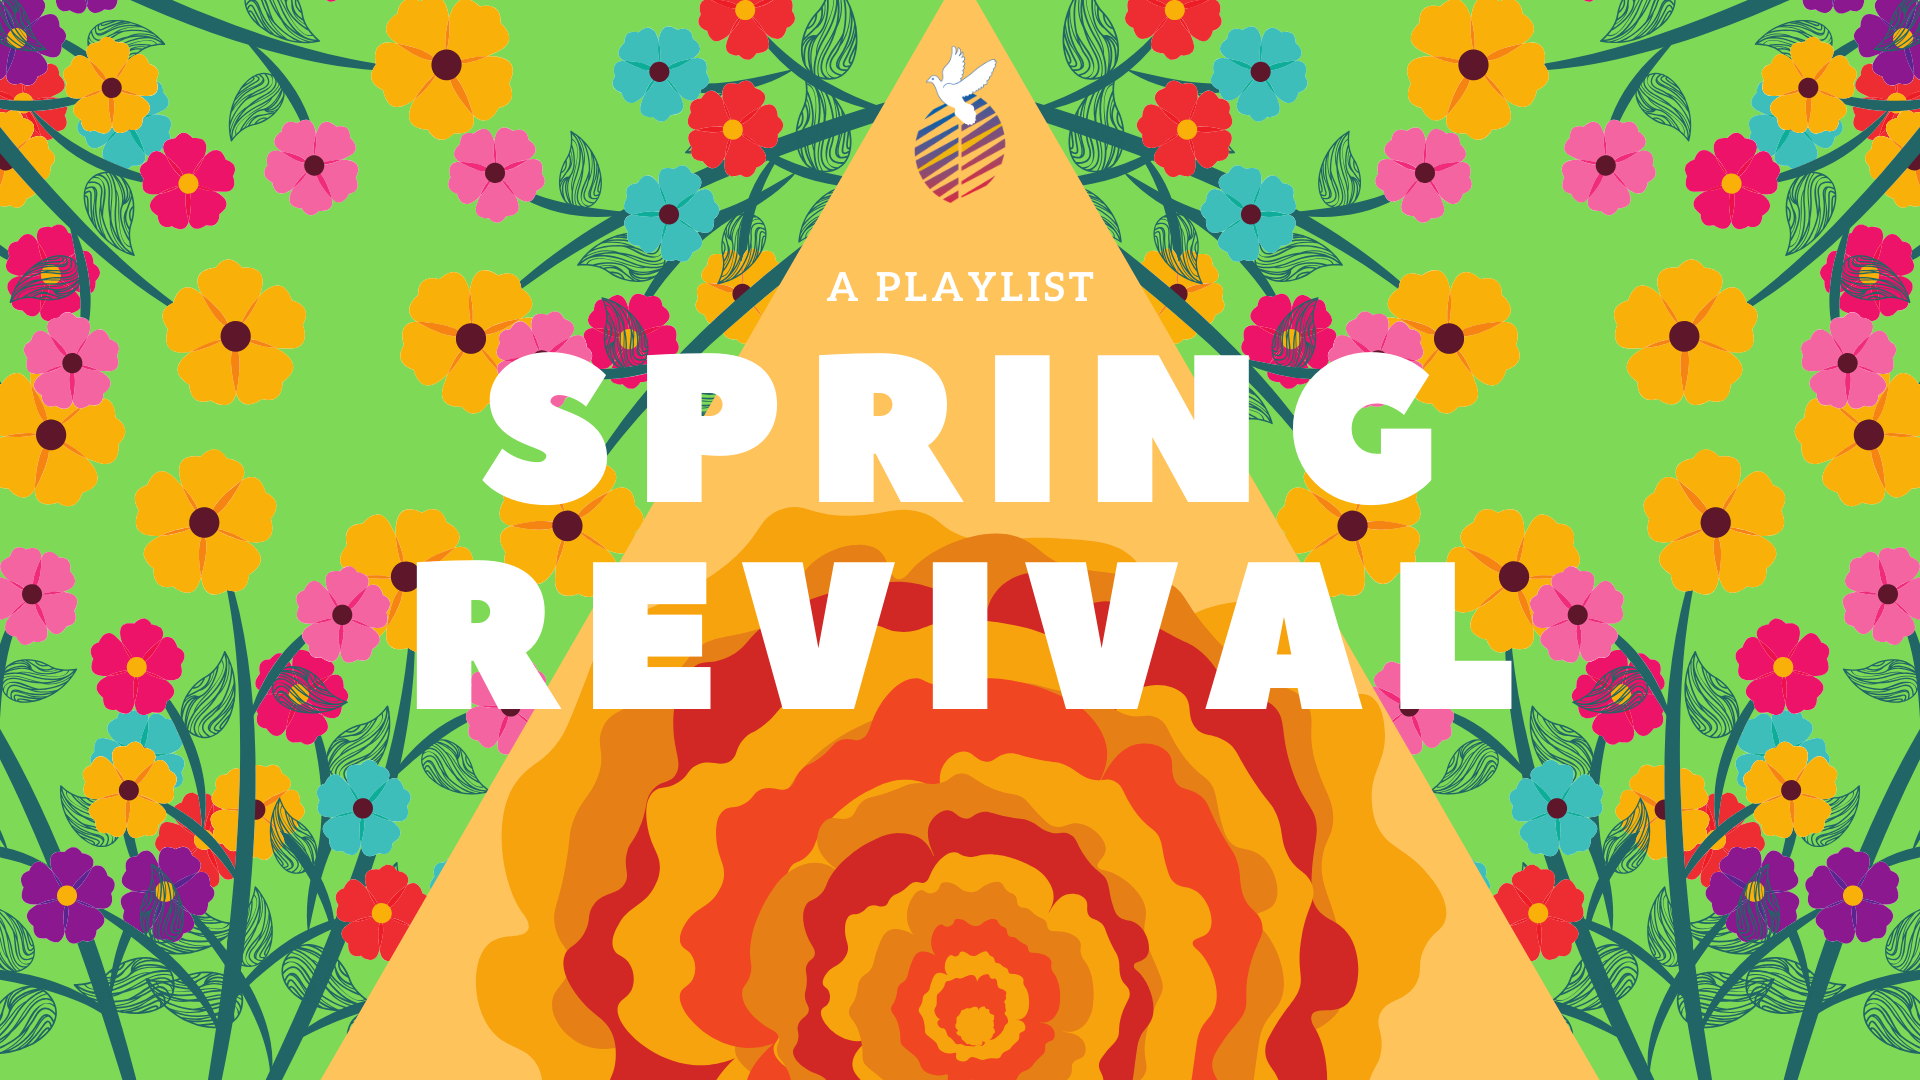 Spring Revival: A Playlist - American Urban Radio Networks